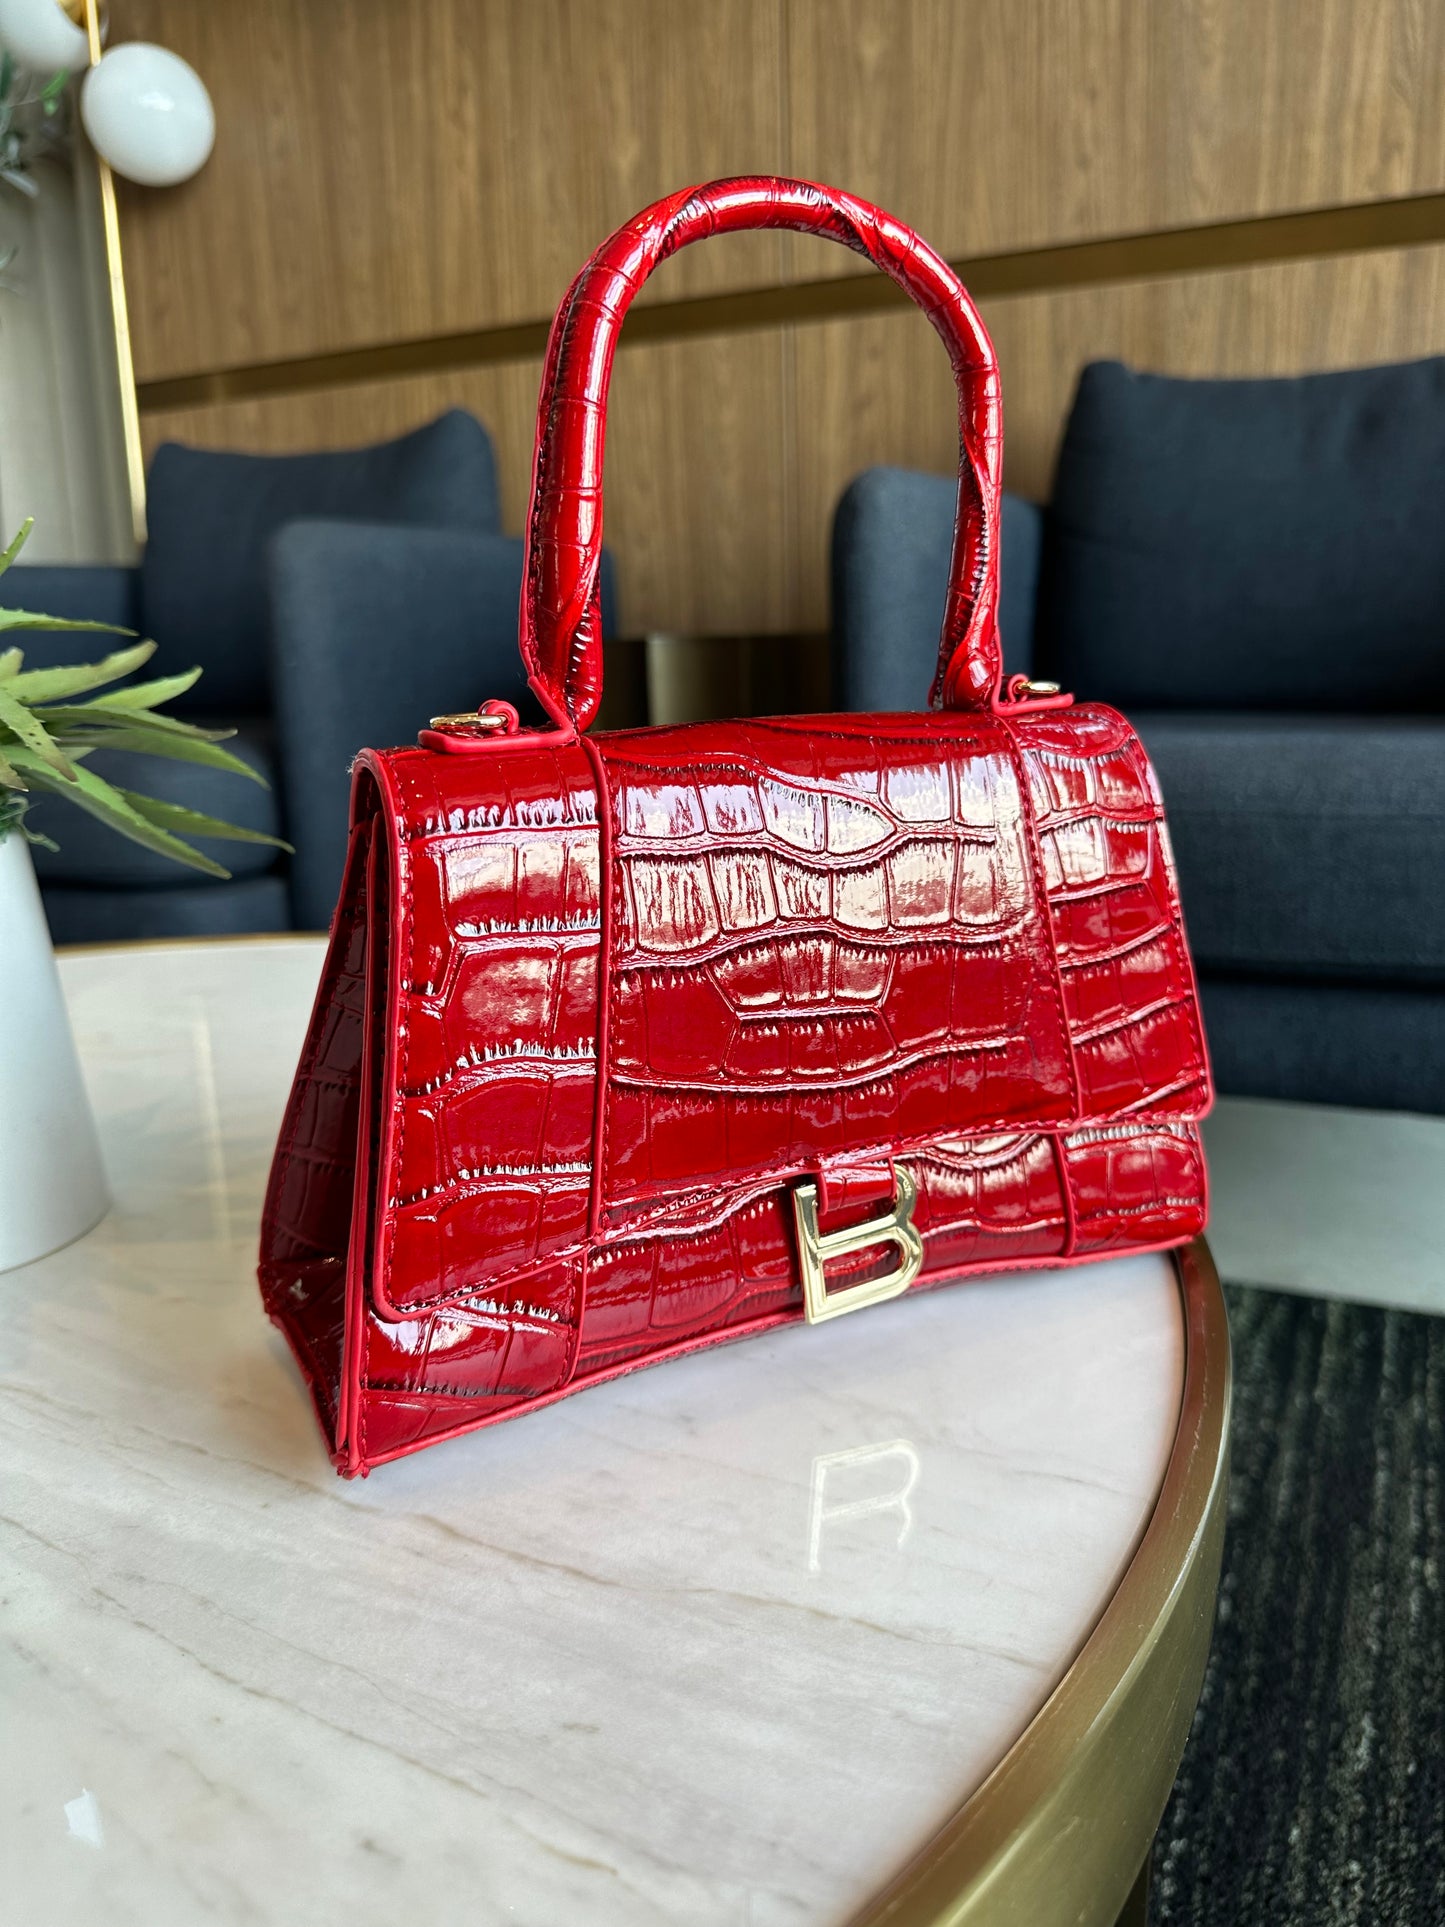 Trip to Bali bag (Red)